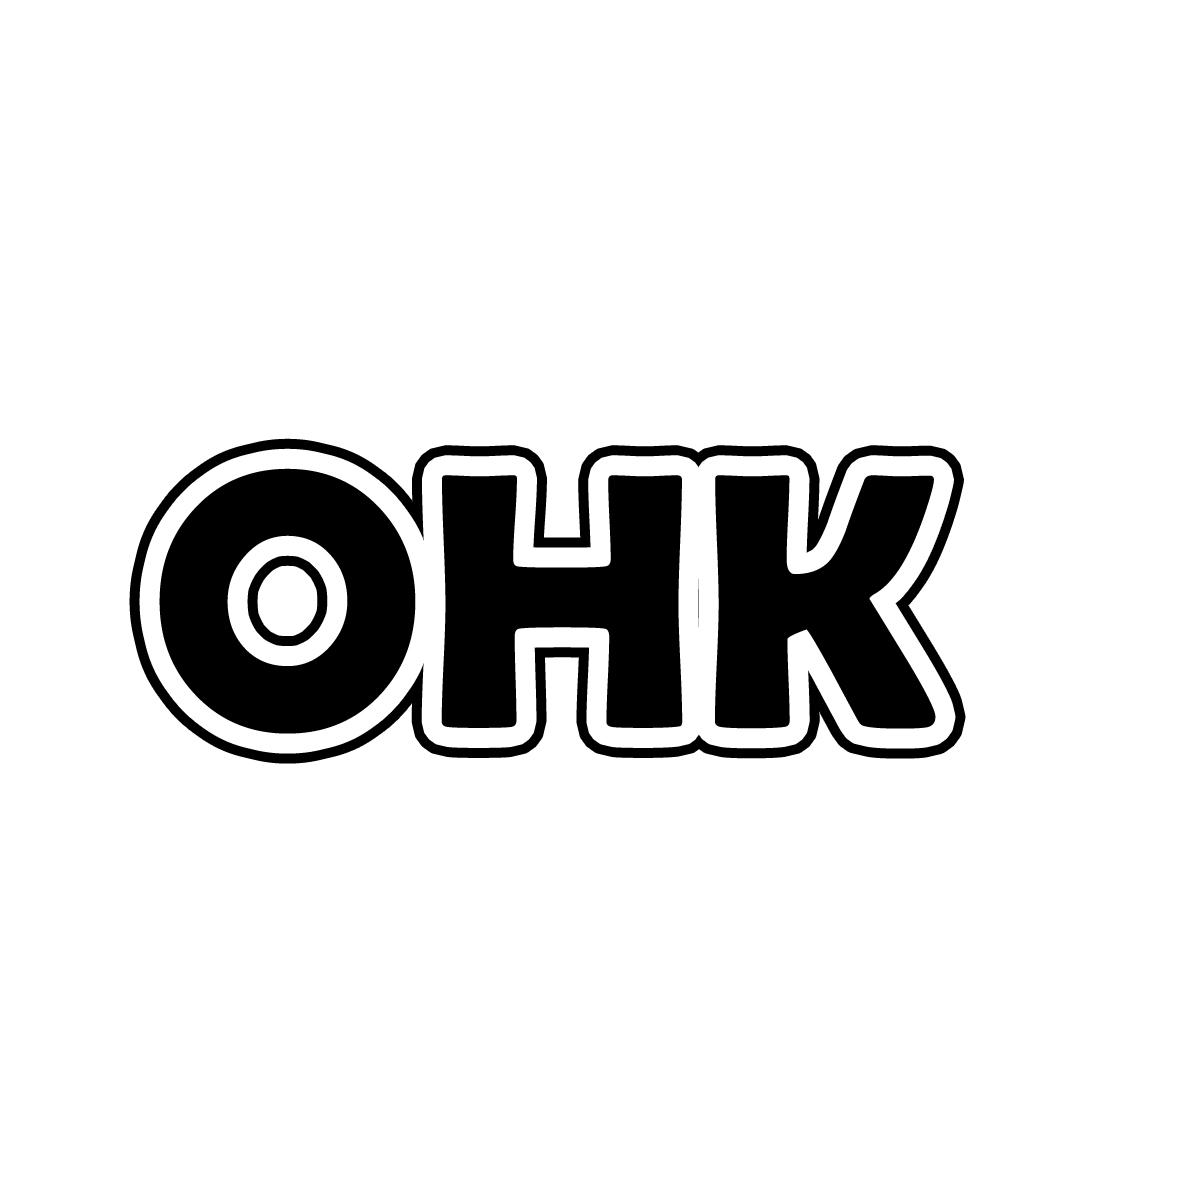 OHK商标转让